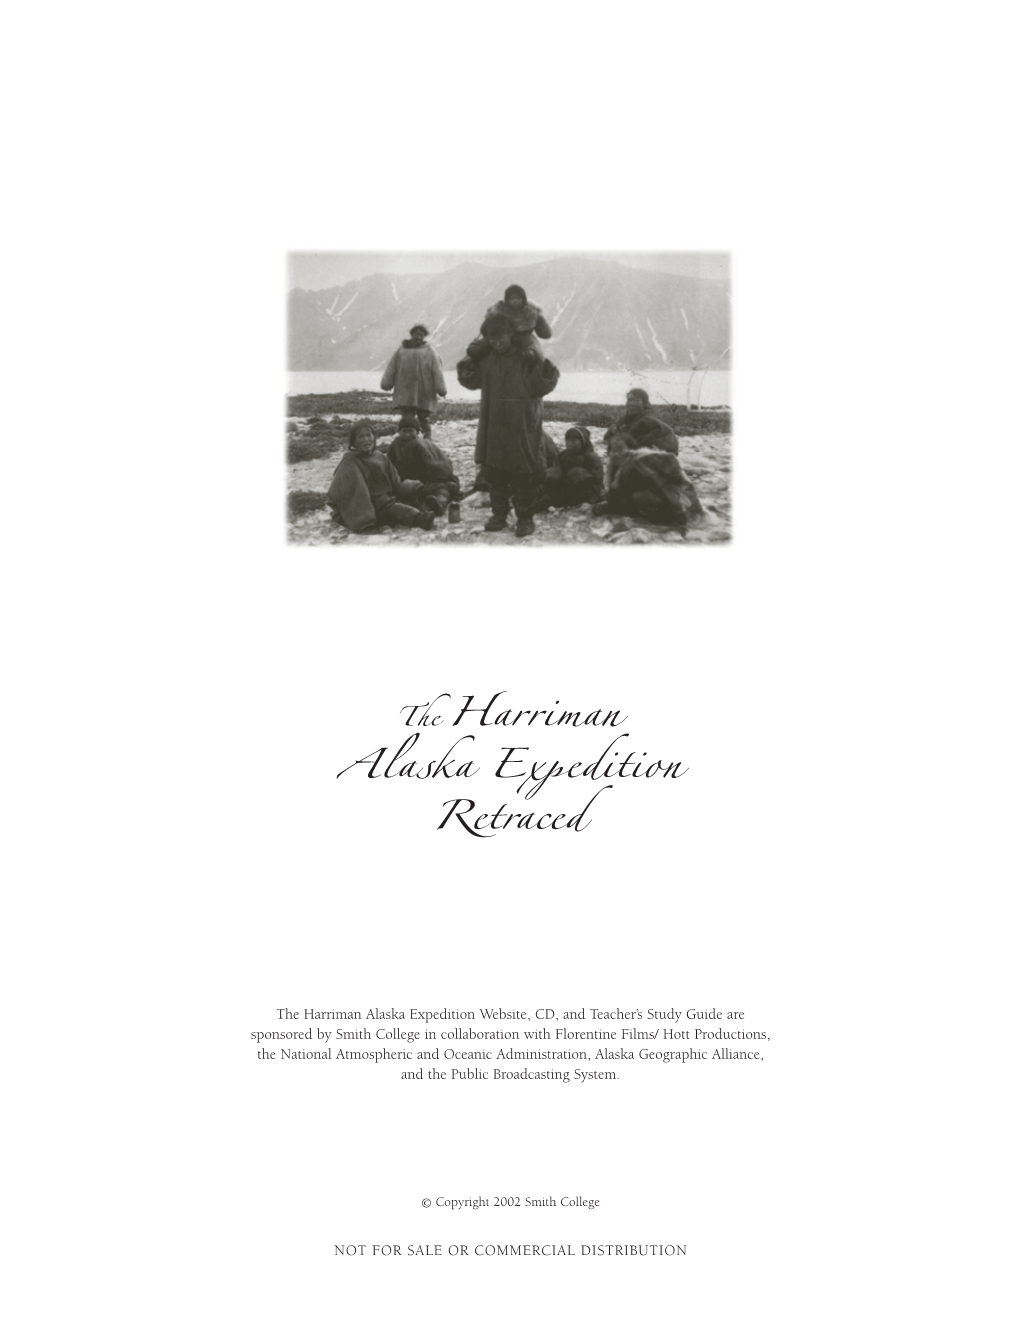 The Harriman Alaska Expedition Retraced